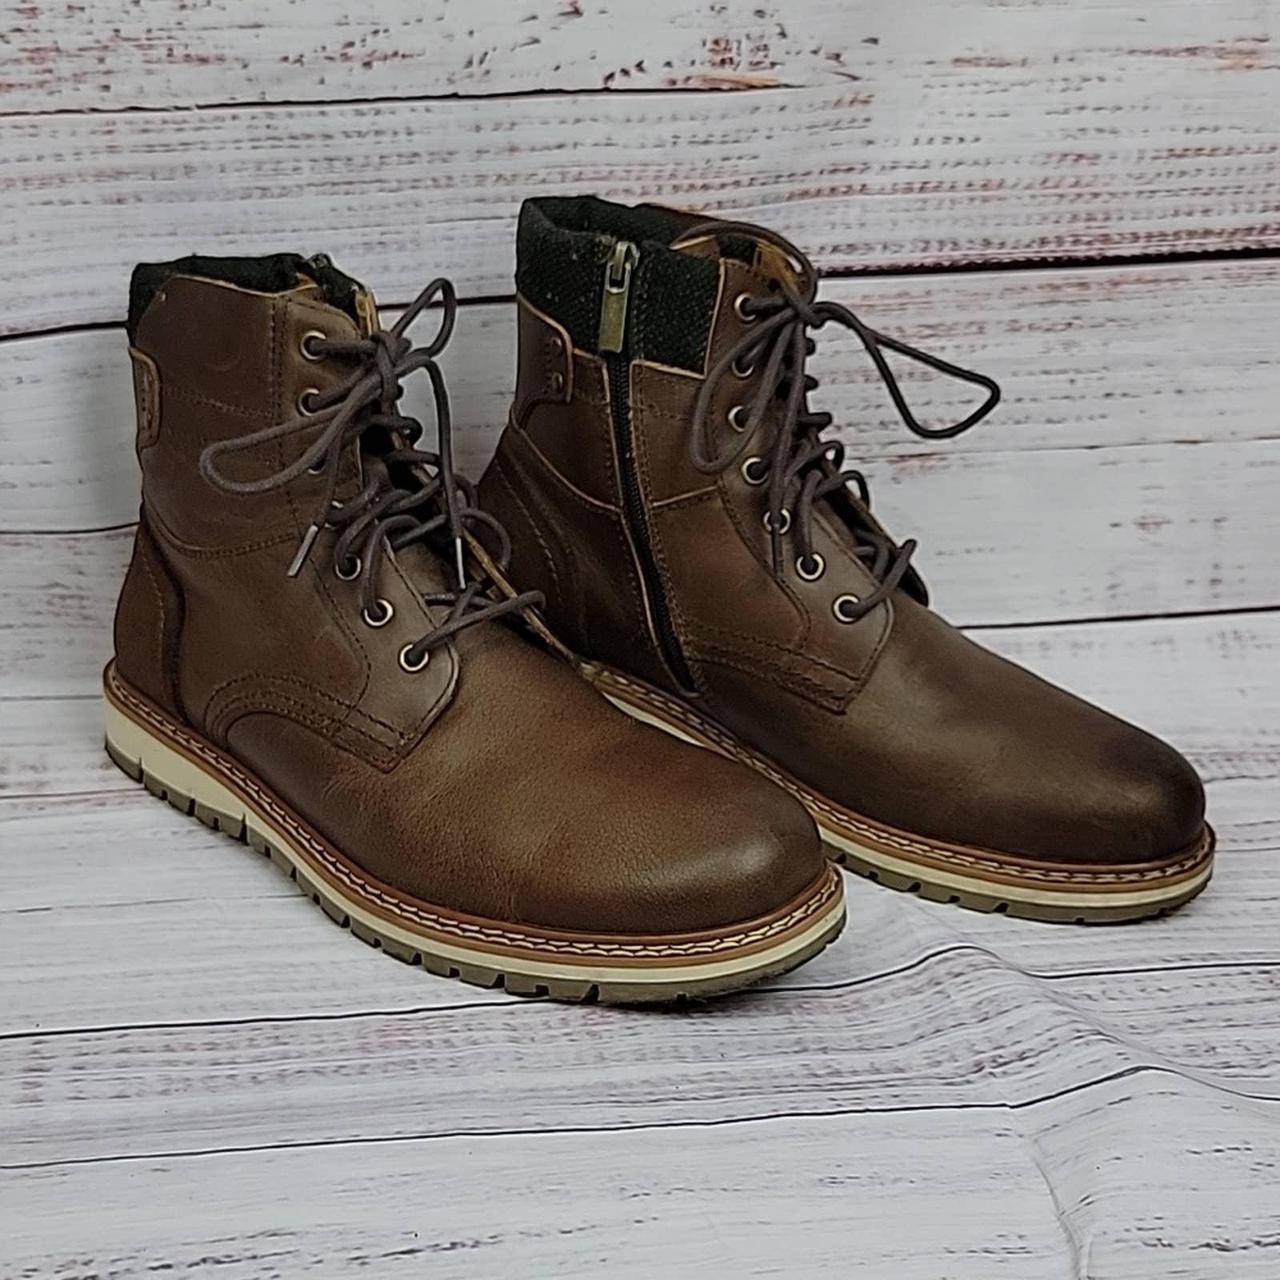 Men's Brown and Tan Boots | Depop